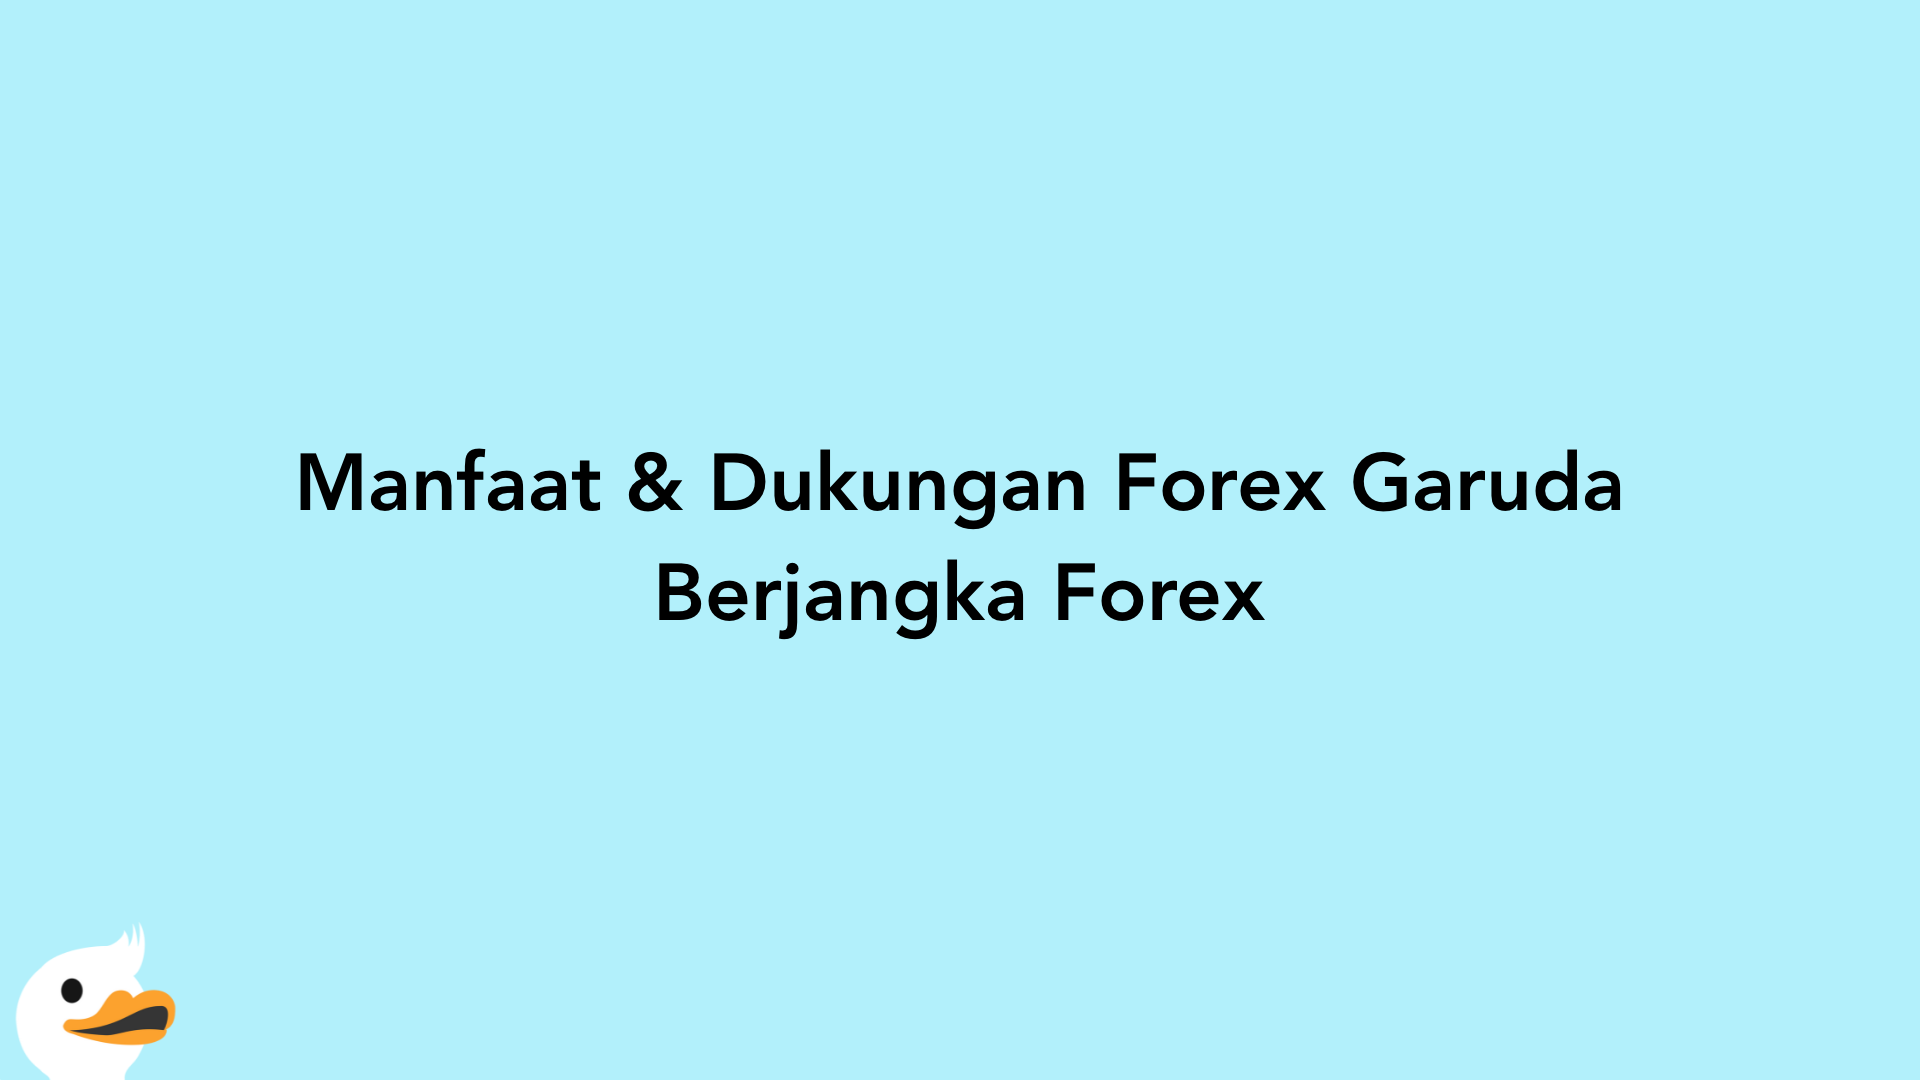 Manfaat & Dukungan Forex Garuda Berjangka Forex